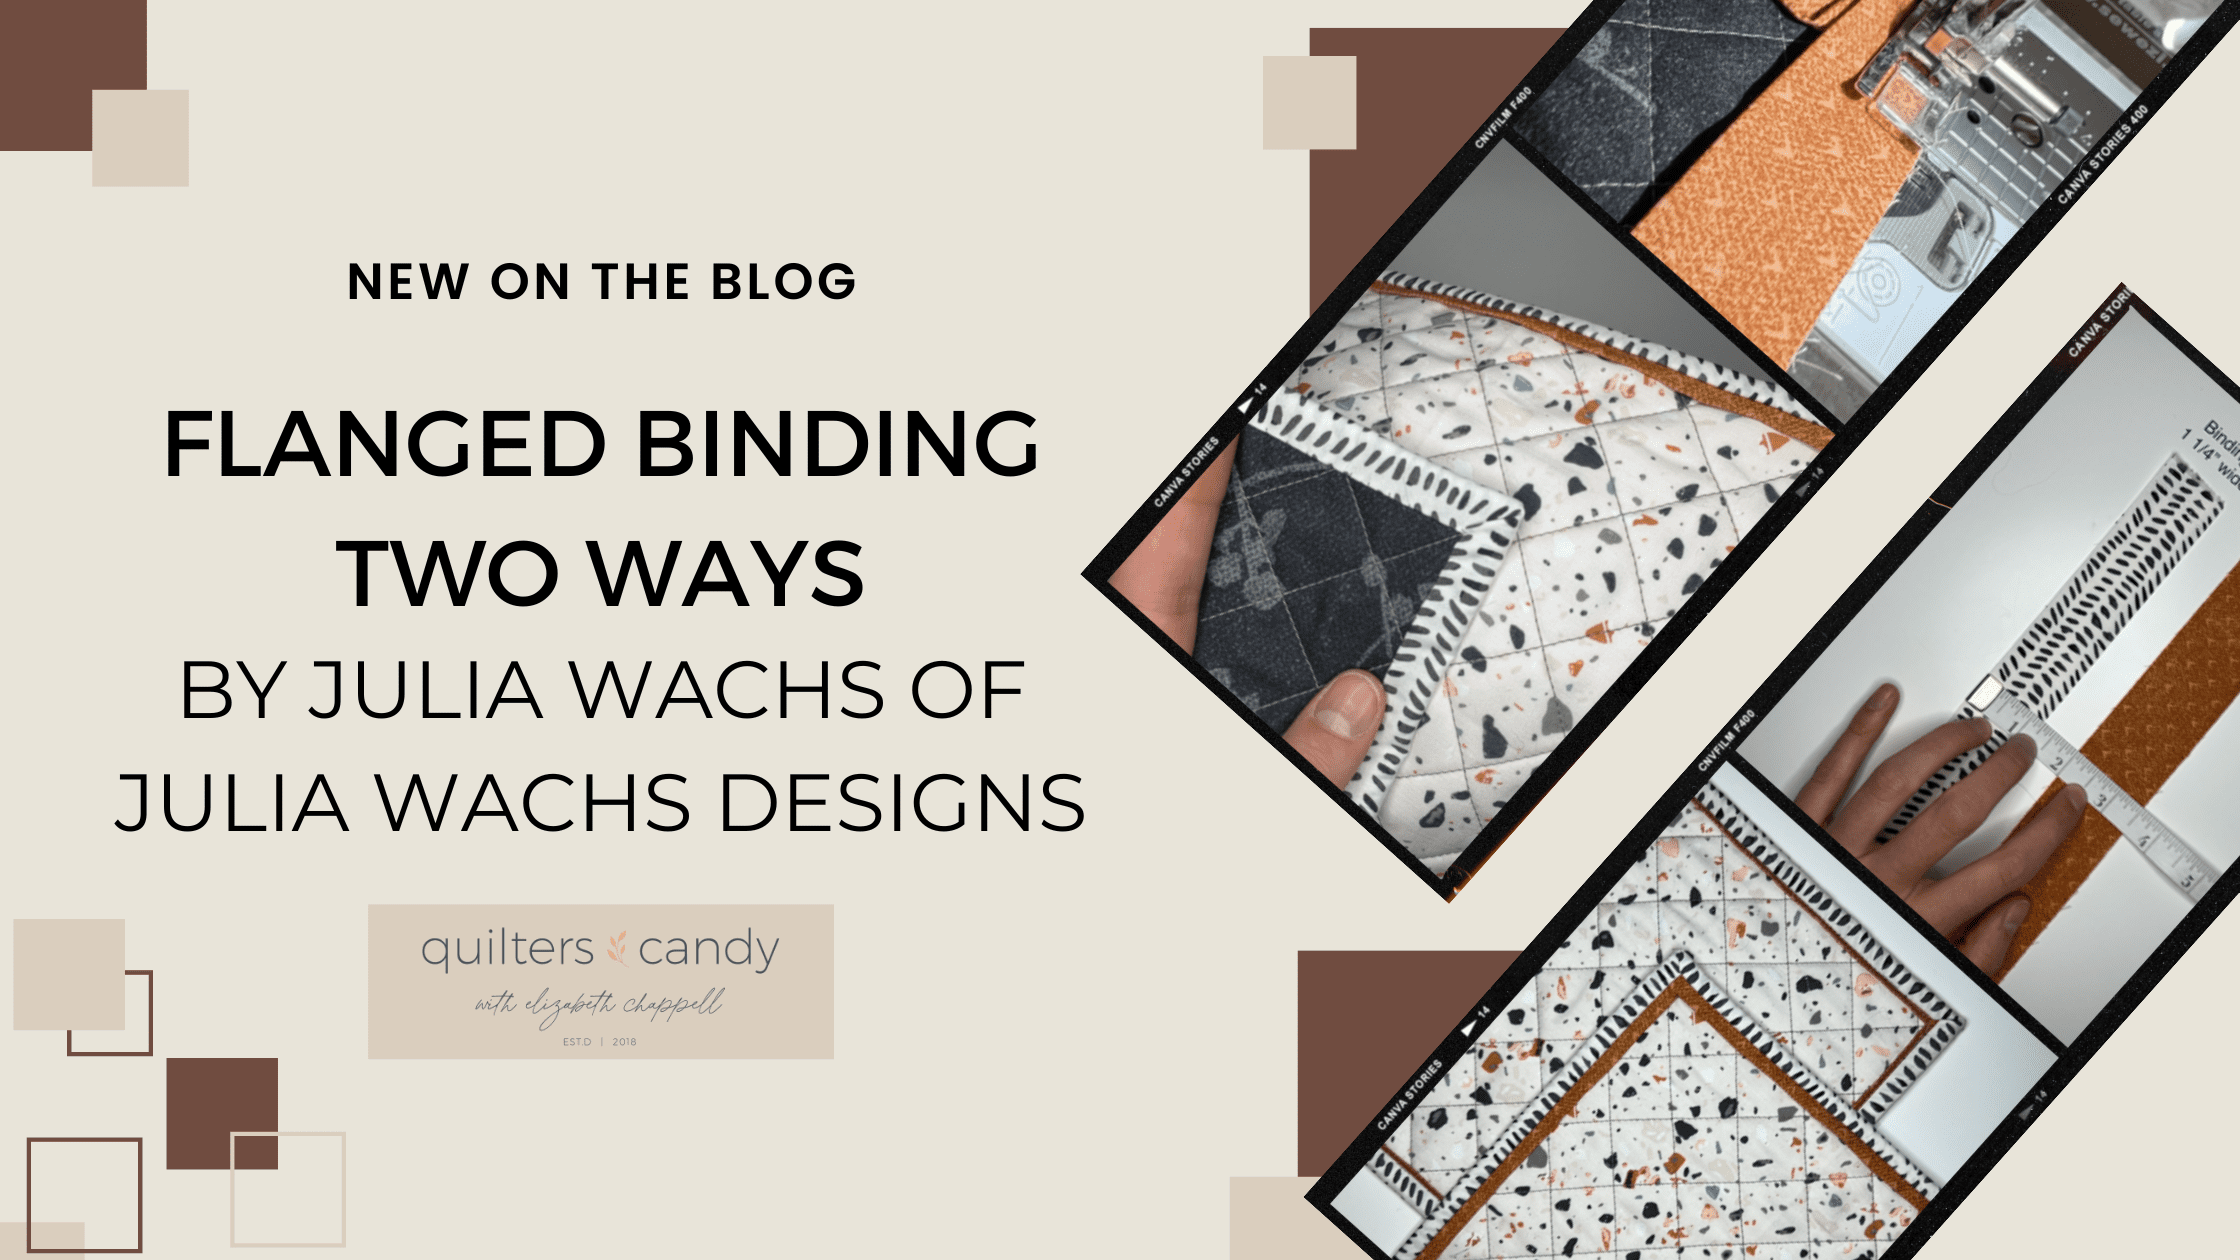 Flanged Binding Two Ways By Julia Wachs of Julia Wachs Designs